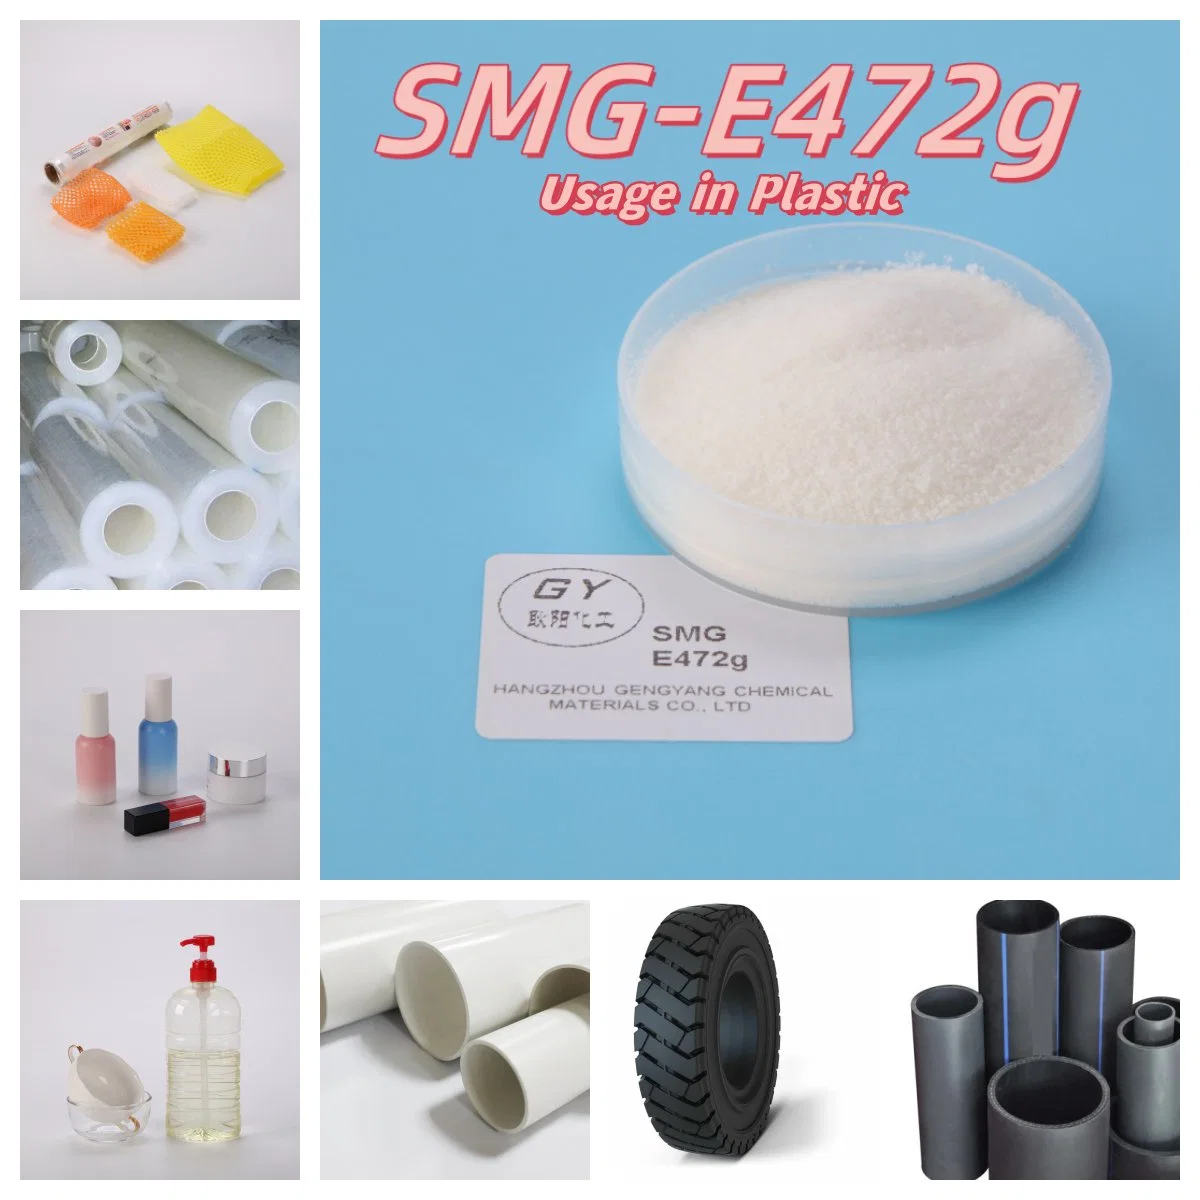 Chemical Smg-E472g Preservatives Natural Food Additives Ingredient